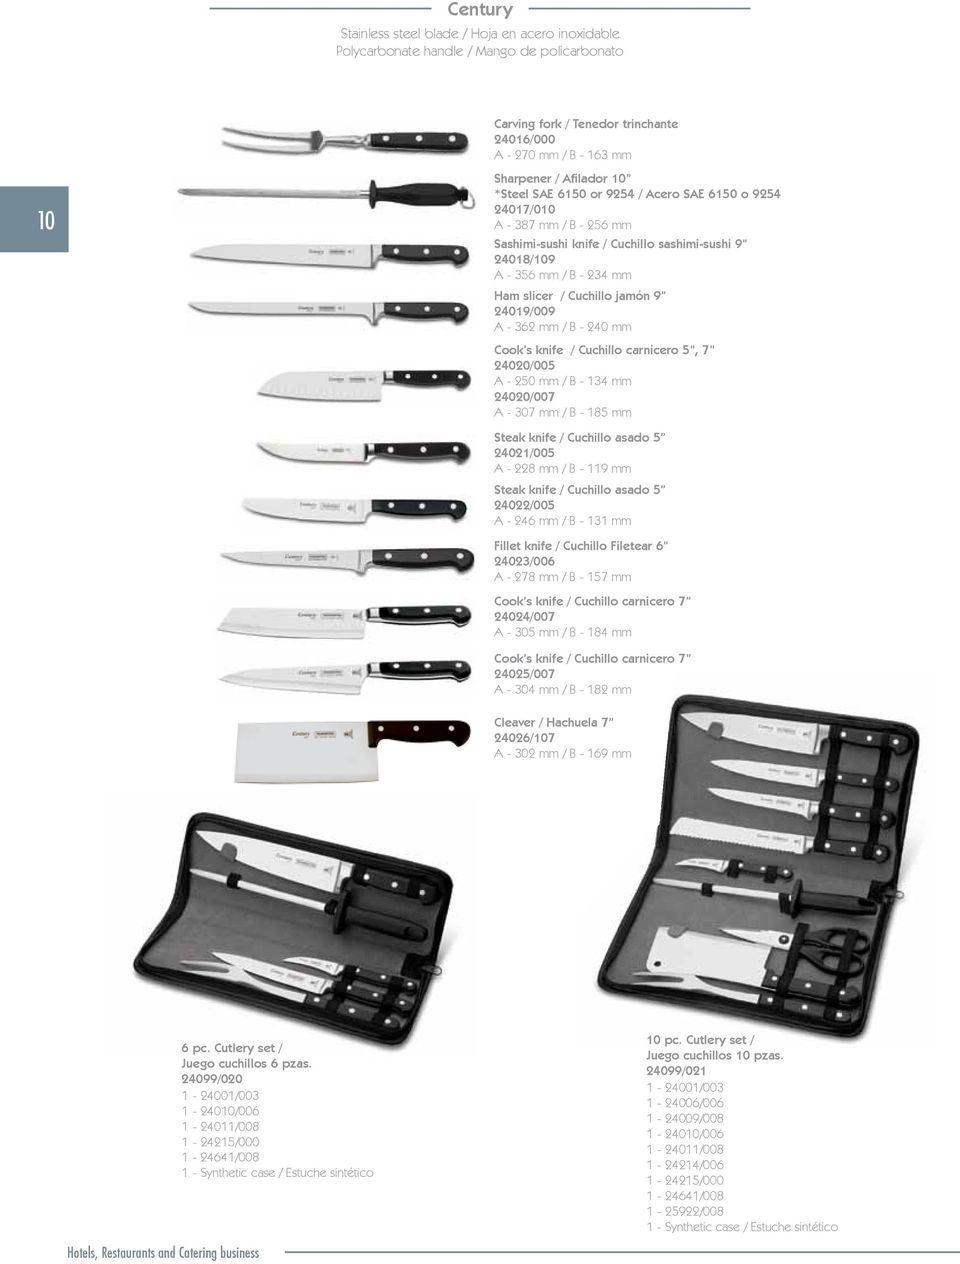 24019/009 A - 362 mm / B - 240 mm Cook s knife / Cuchillo carnicero 5, 7 24020/005 A - 250 mm / B - 134 mm 24020/007 A - 307 mm / B - 185 mm Steak knife / Cuchillo asado 5 24021/005 A - 228 mm / B -